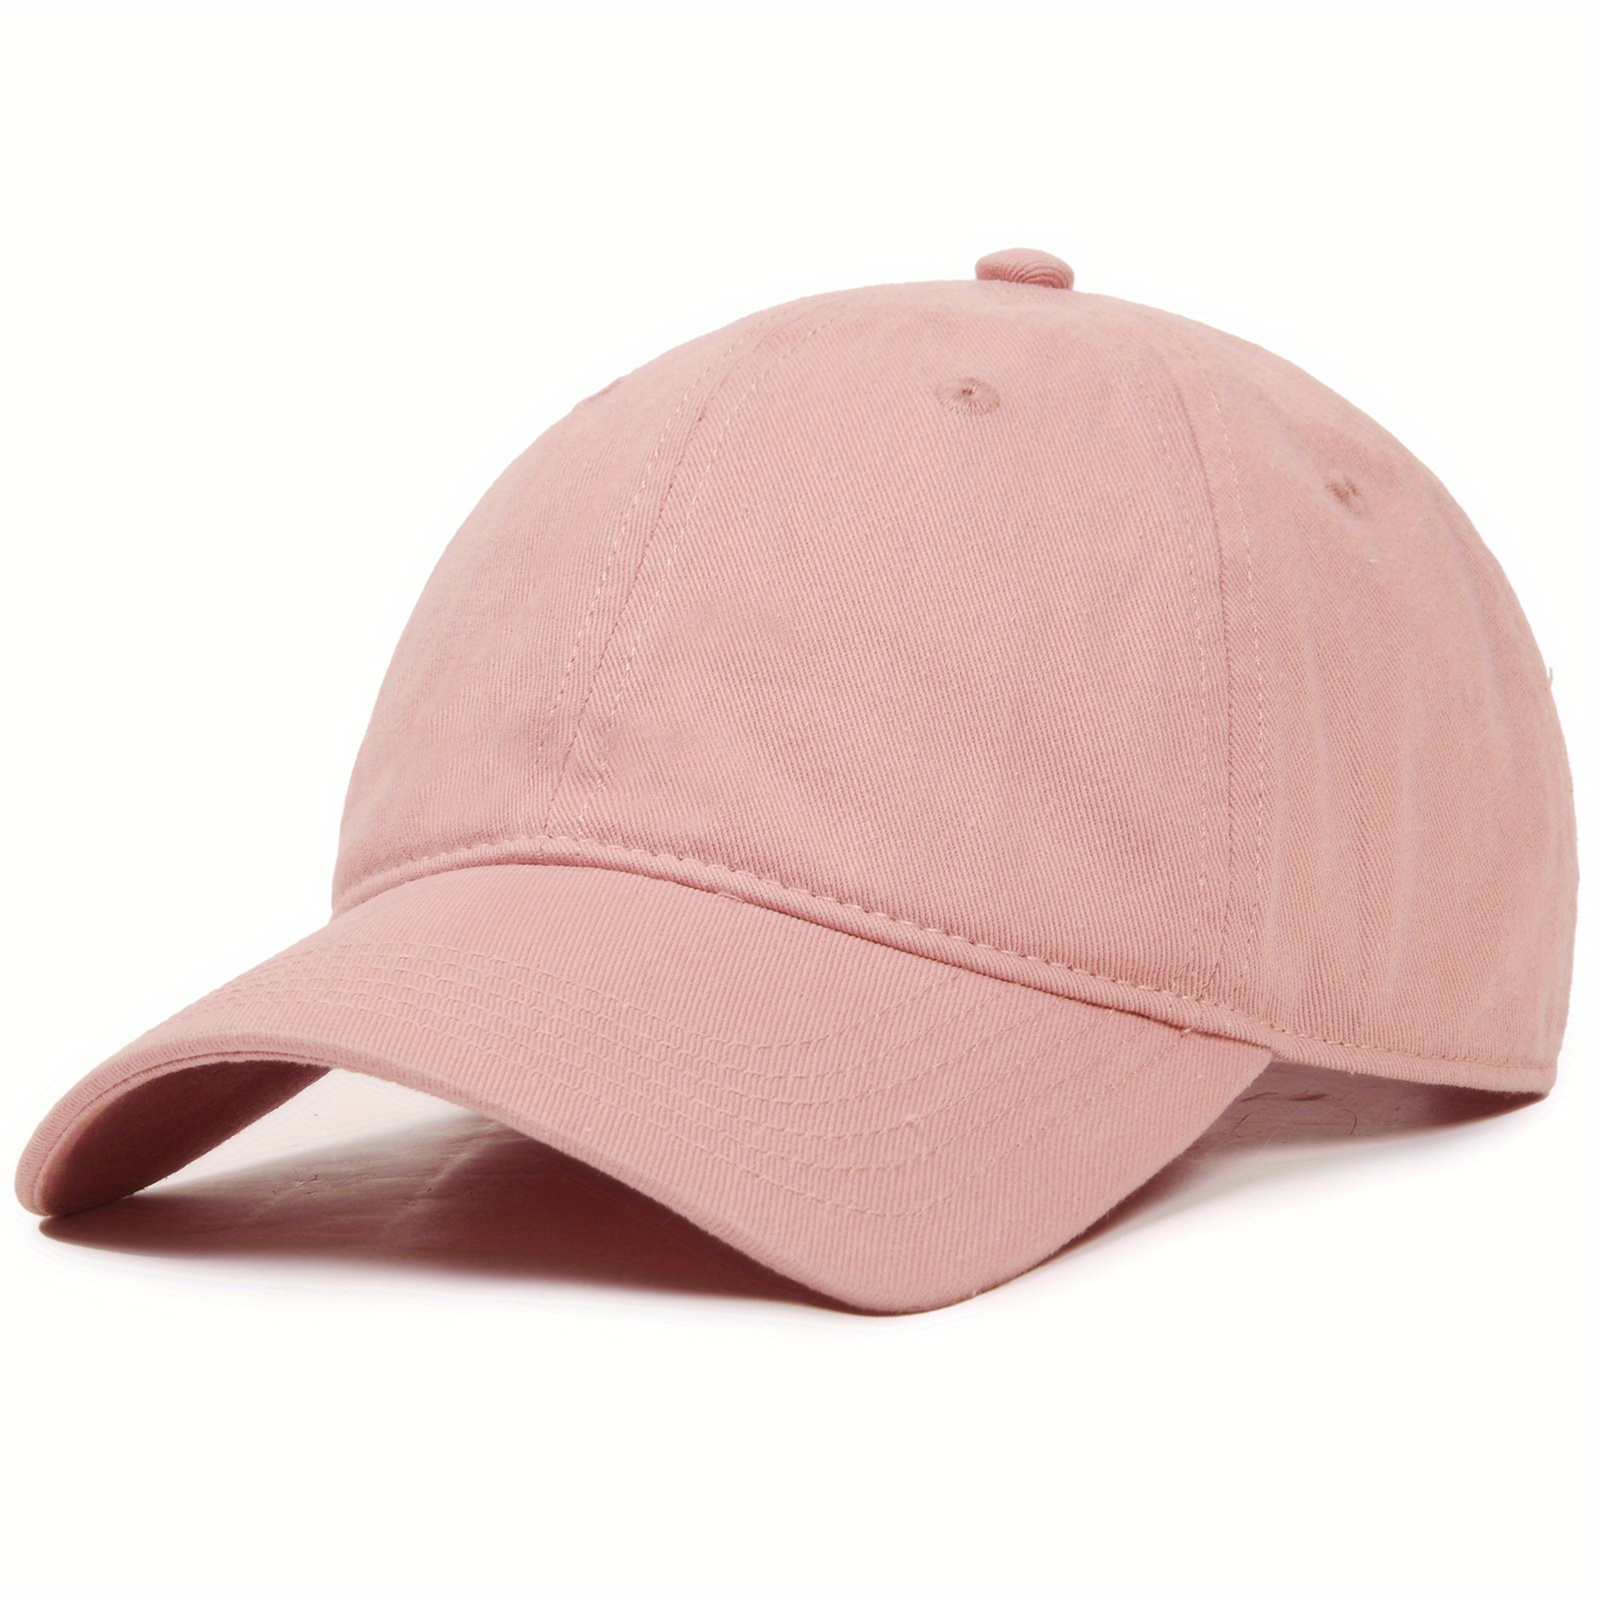 Buy Edoneery Men Women Cotton Adjustable Washed Twill Low Profile Plain  Baseball Cap Hat ï¼ˆGreyï¼‰ at